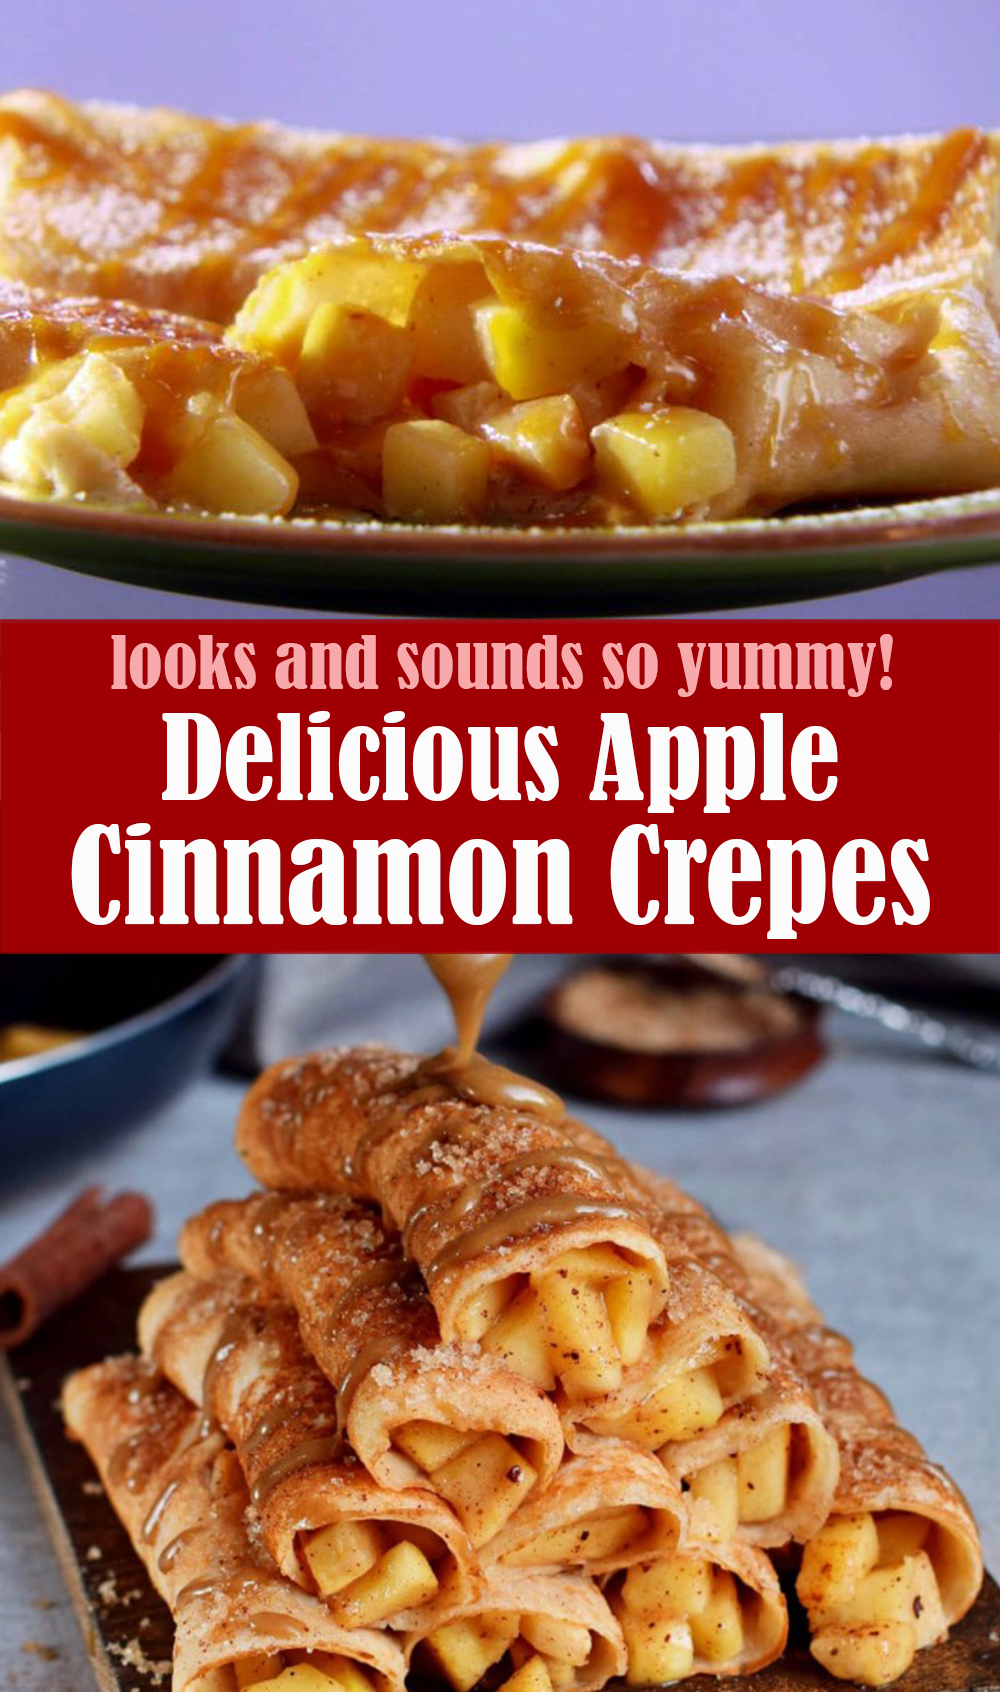 Delicious Apple Cinnamon Crepes Recipes